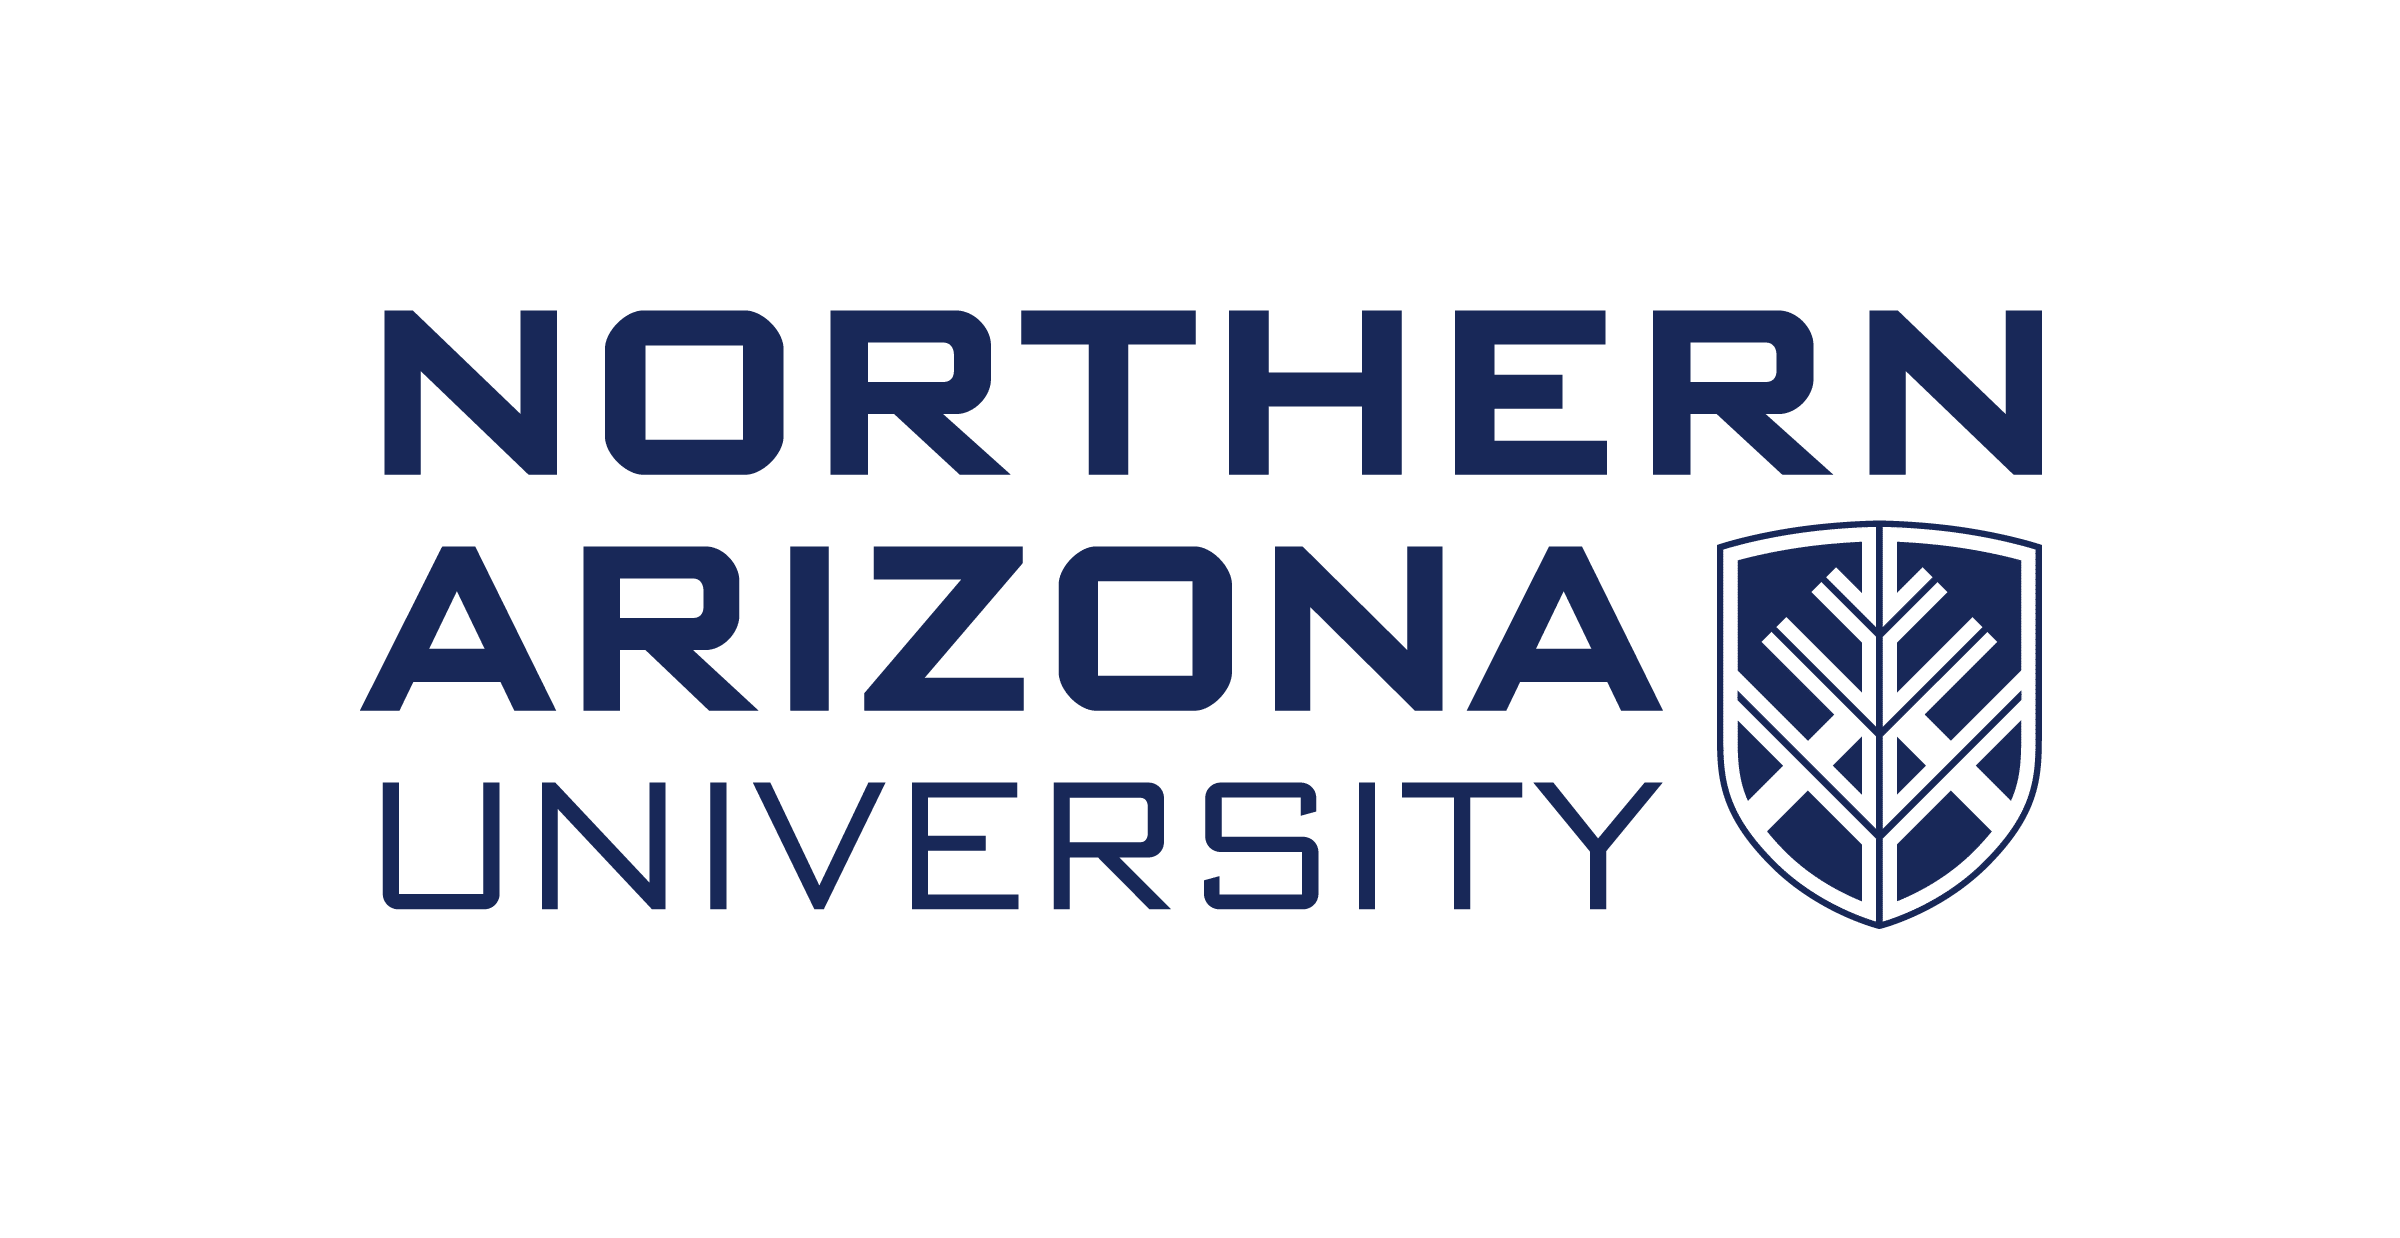 Nau Lumberjacks Logo - Northern arizona university Logos